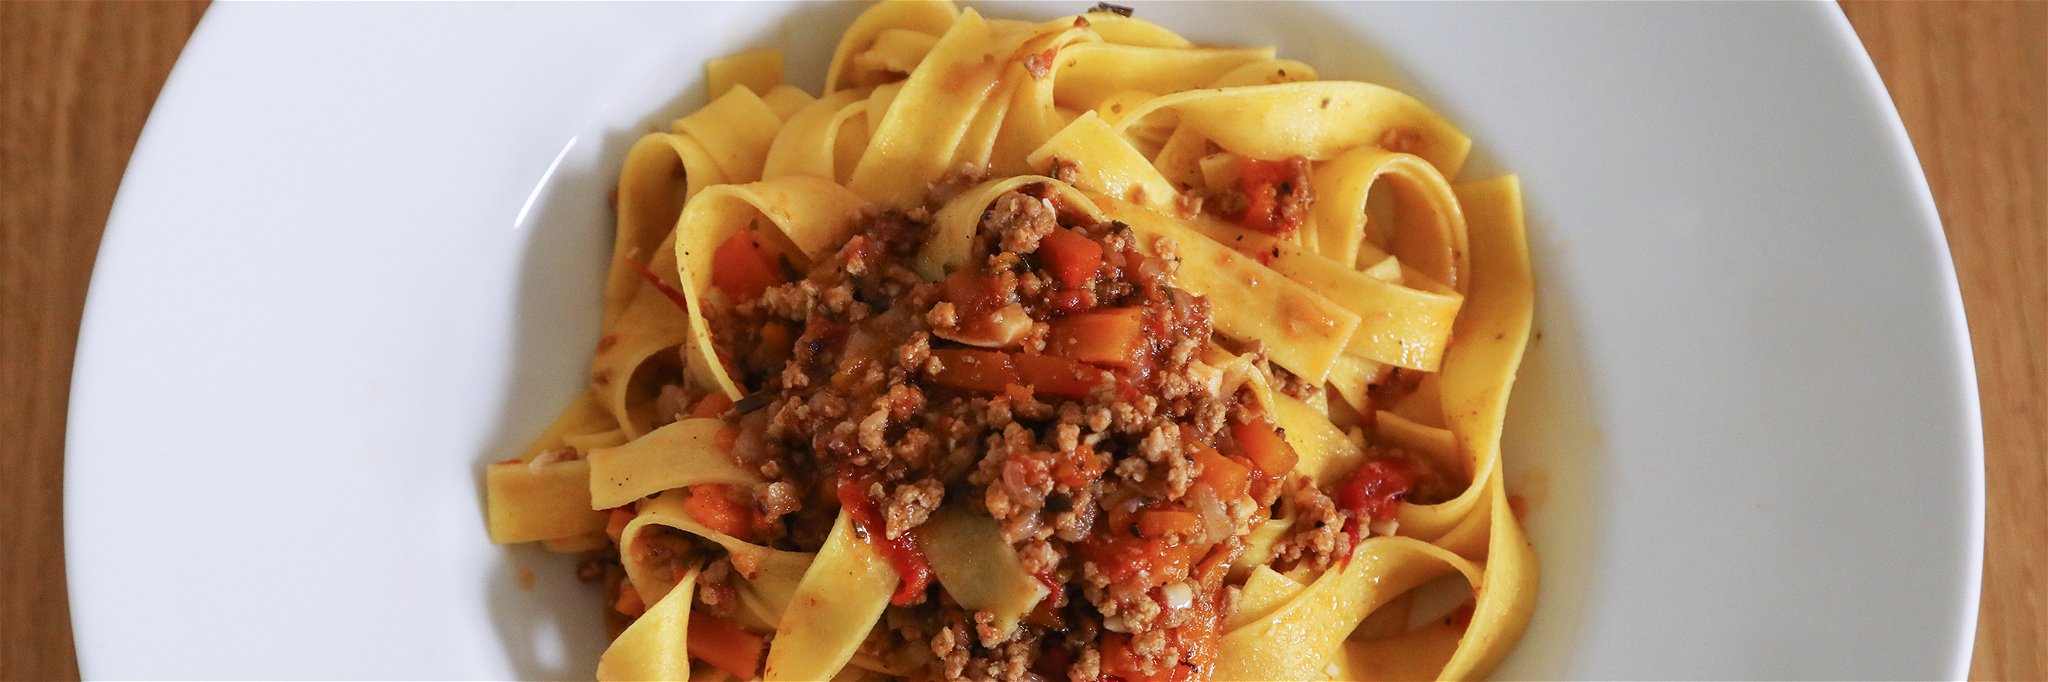 Meat Sauce for Pasta: Ragu di Carne